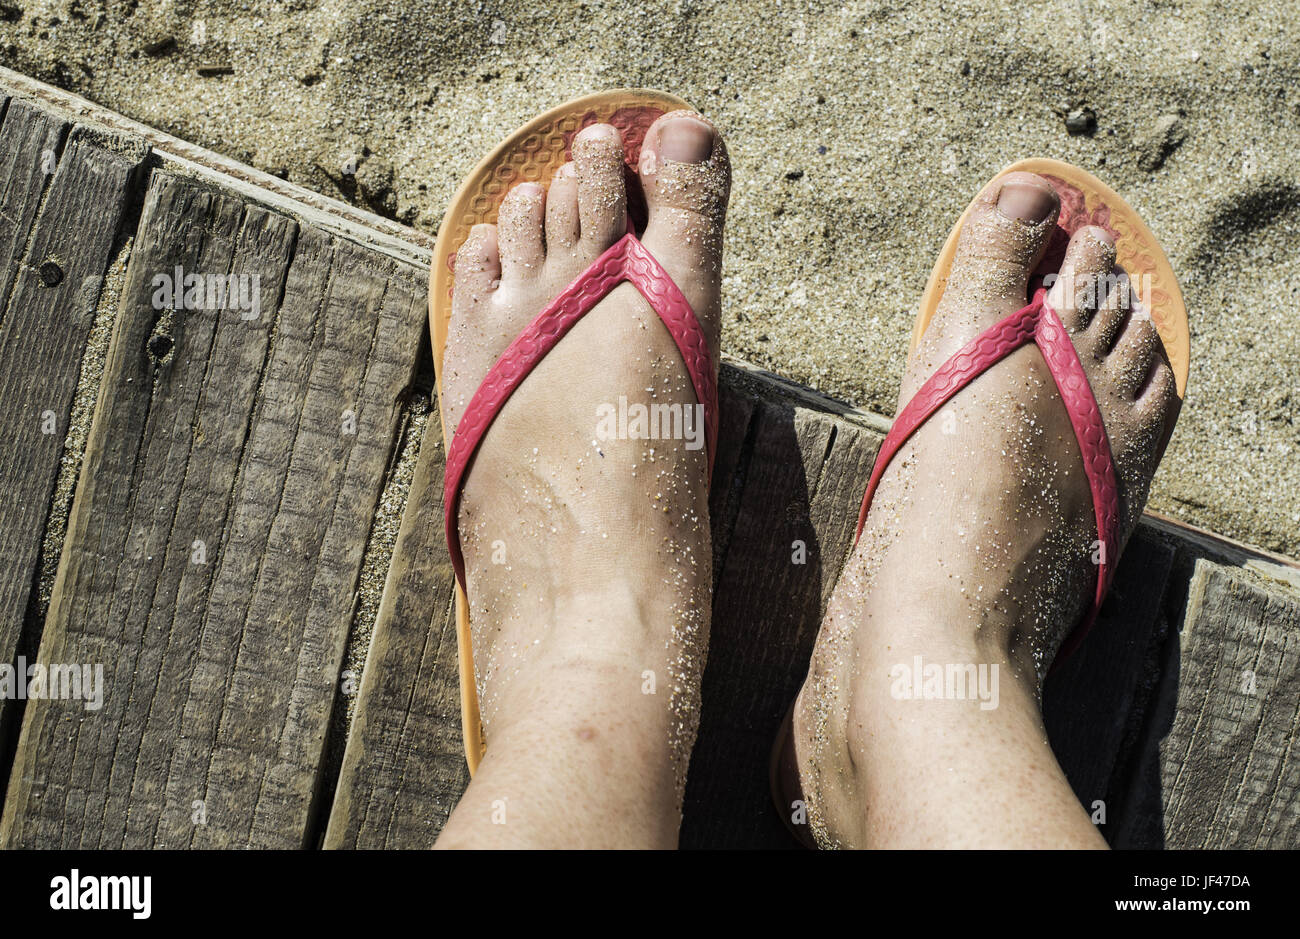 Women foots on the beach Stock Photo - Alamy